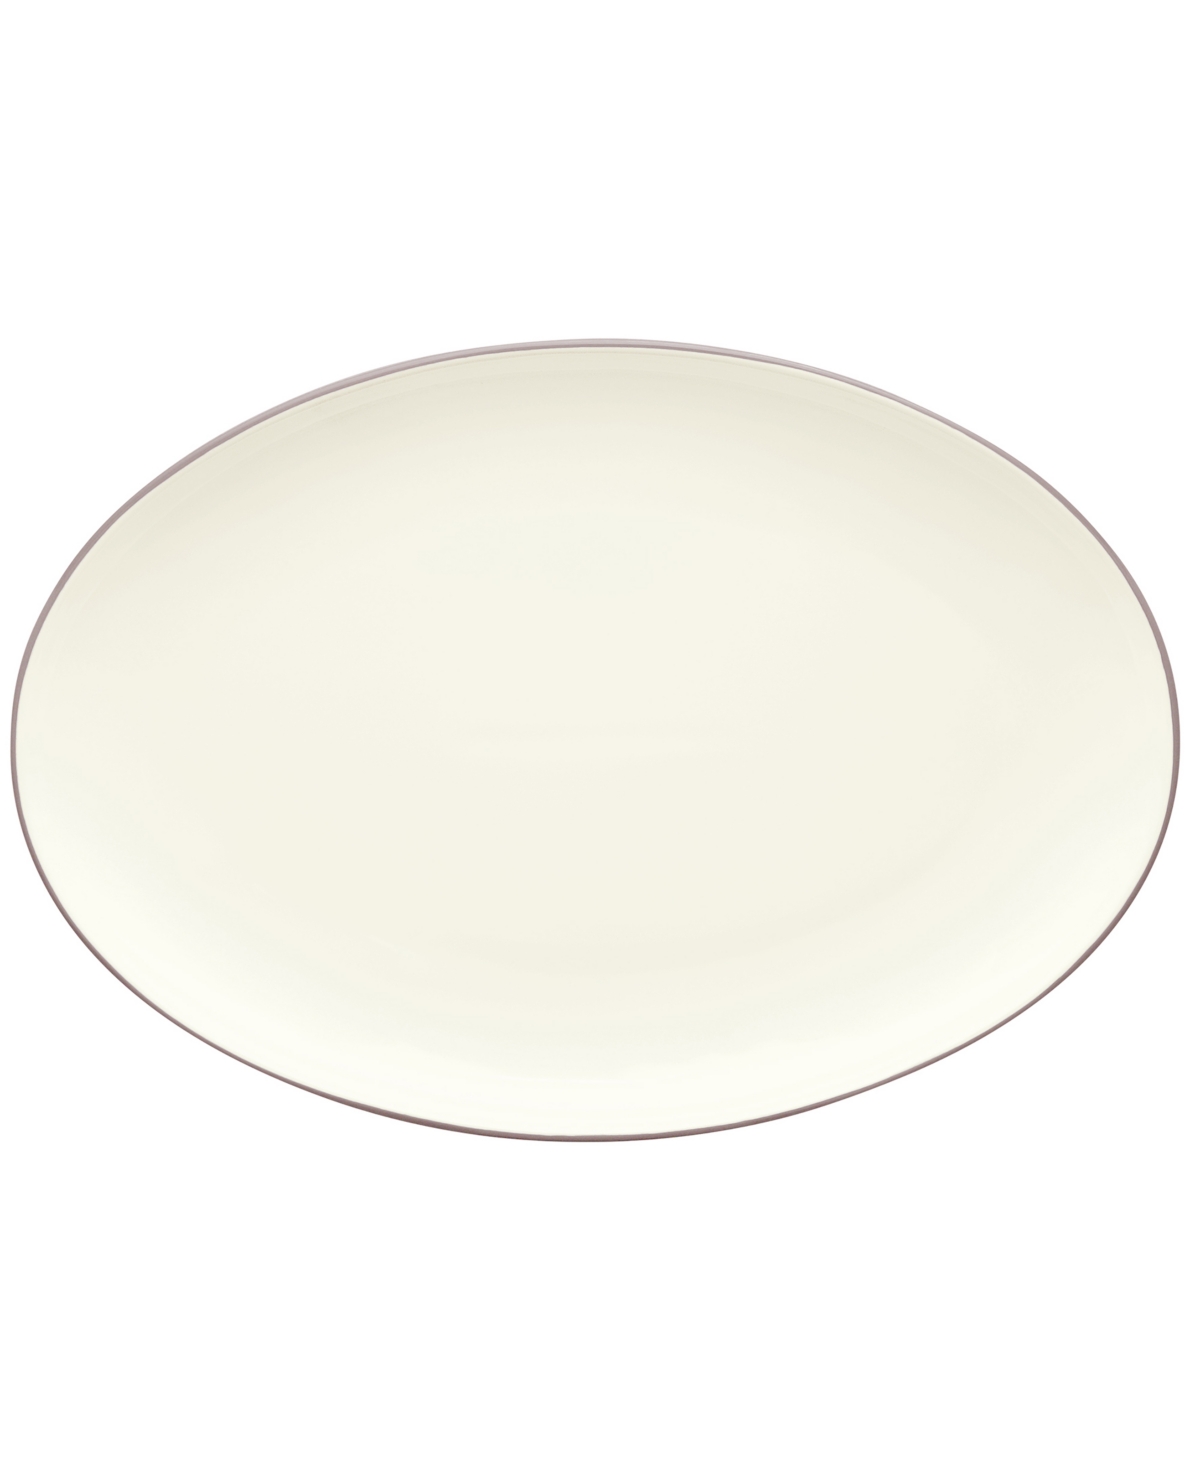 Noritake Colorwave 16" Oval Platter In Clay